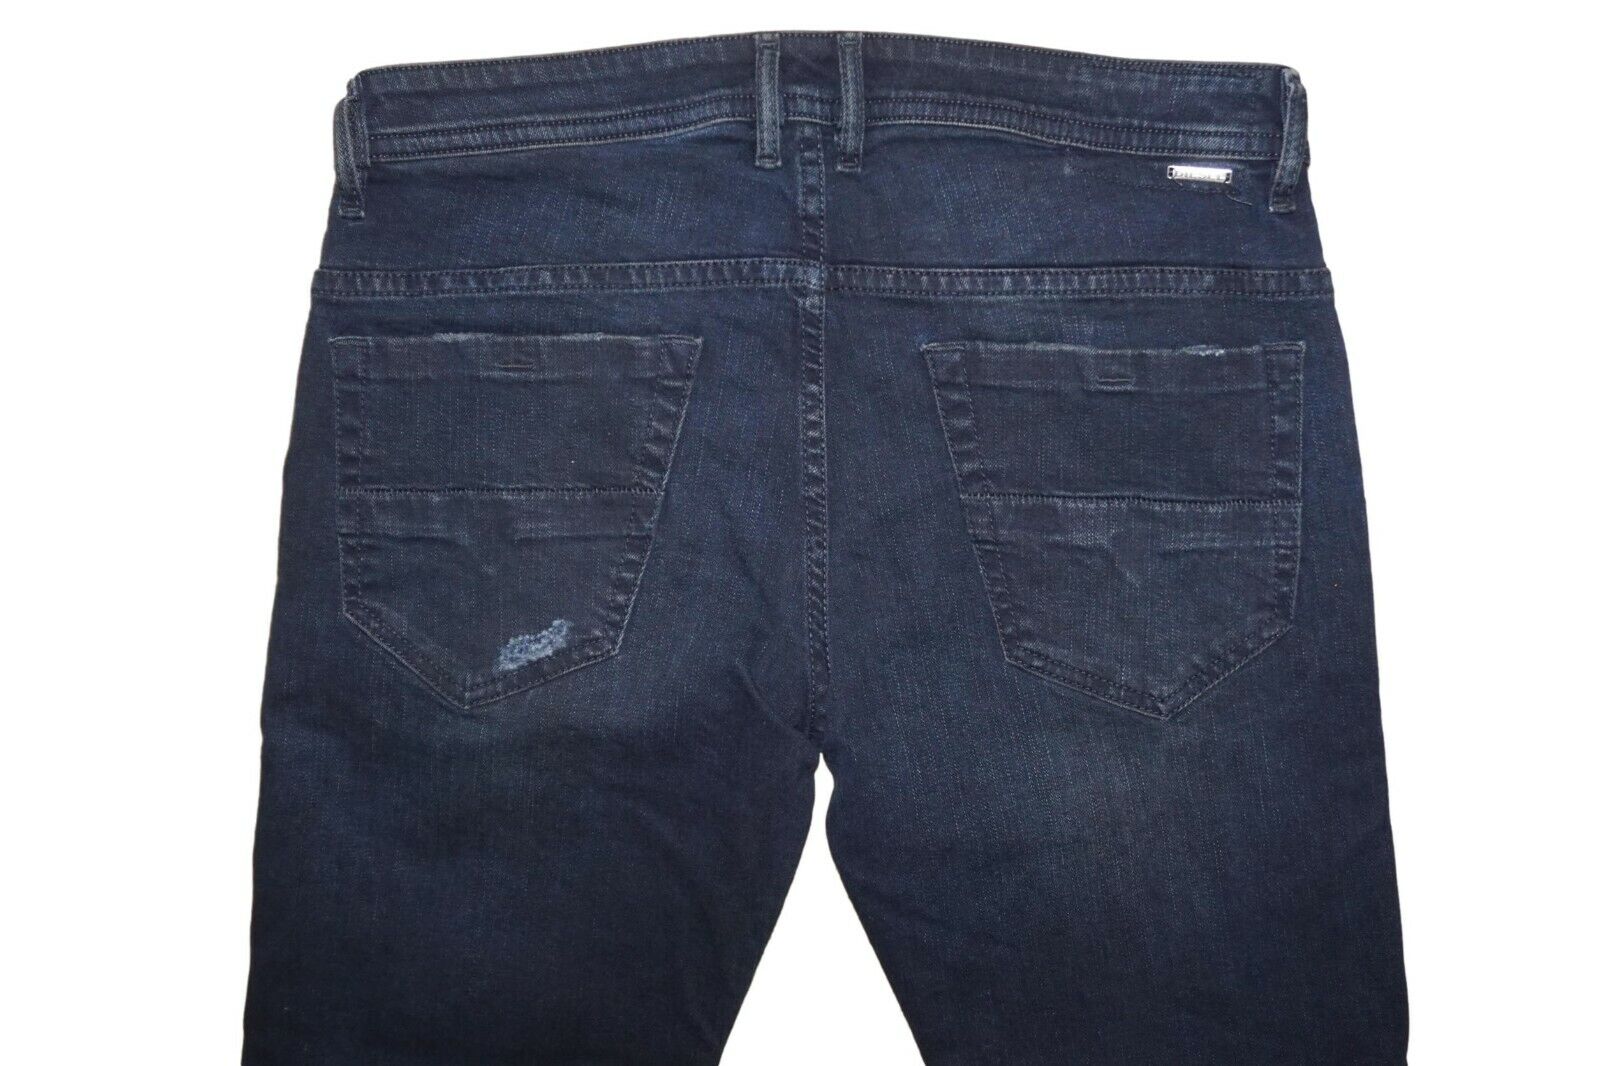 Diesel thommer jeans - Find the best price at PriceSpy